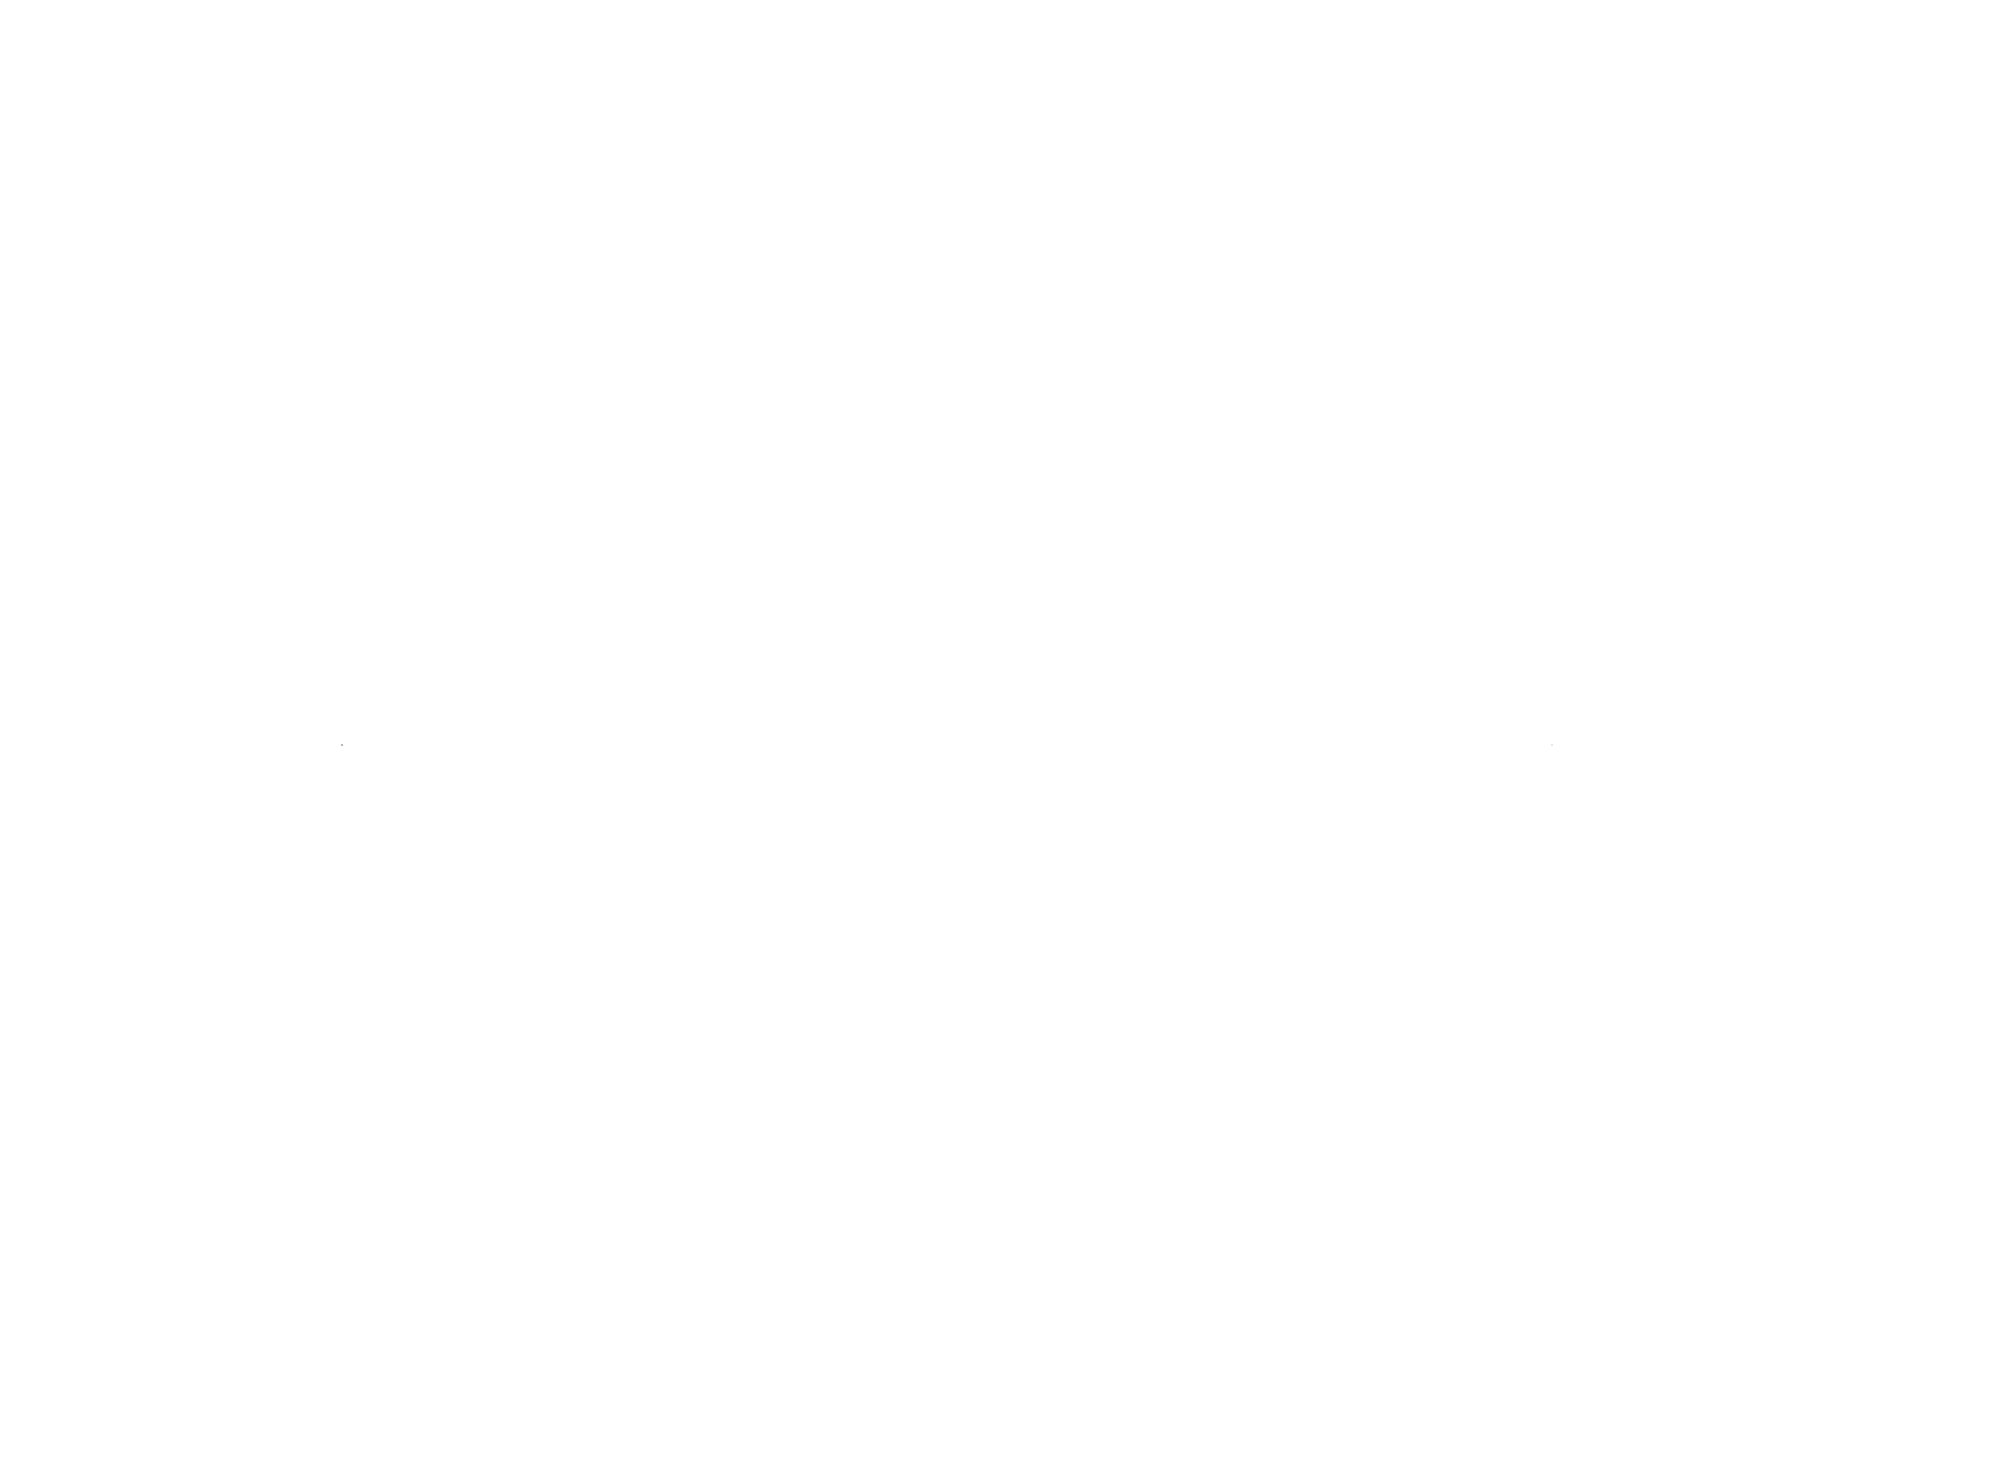 Visions Reiki & Soul Spa